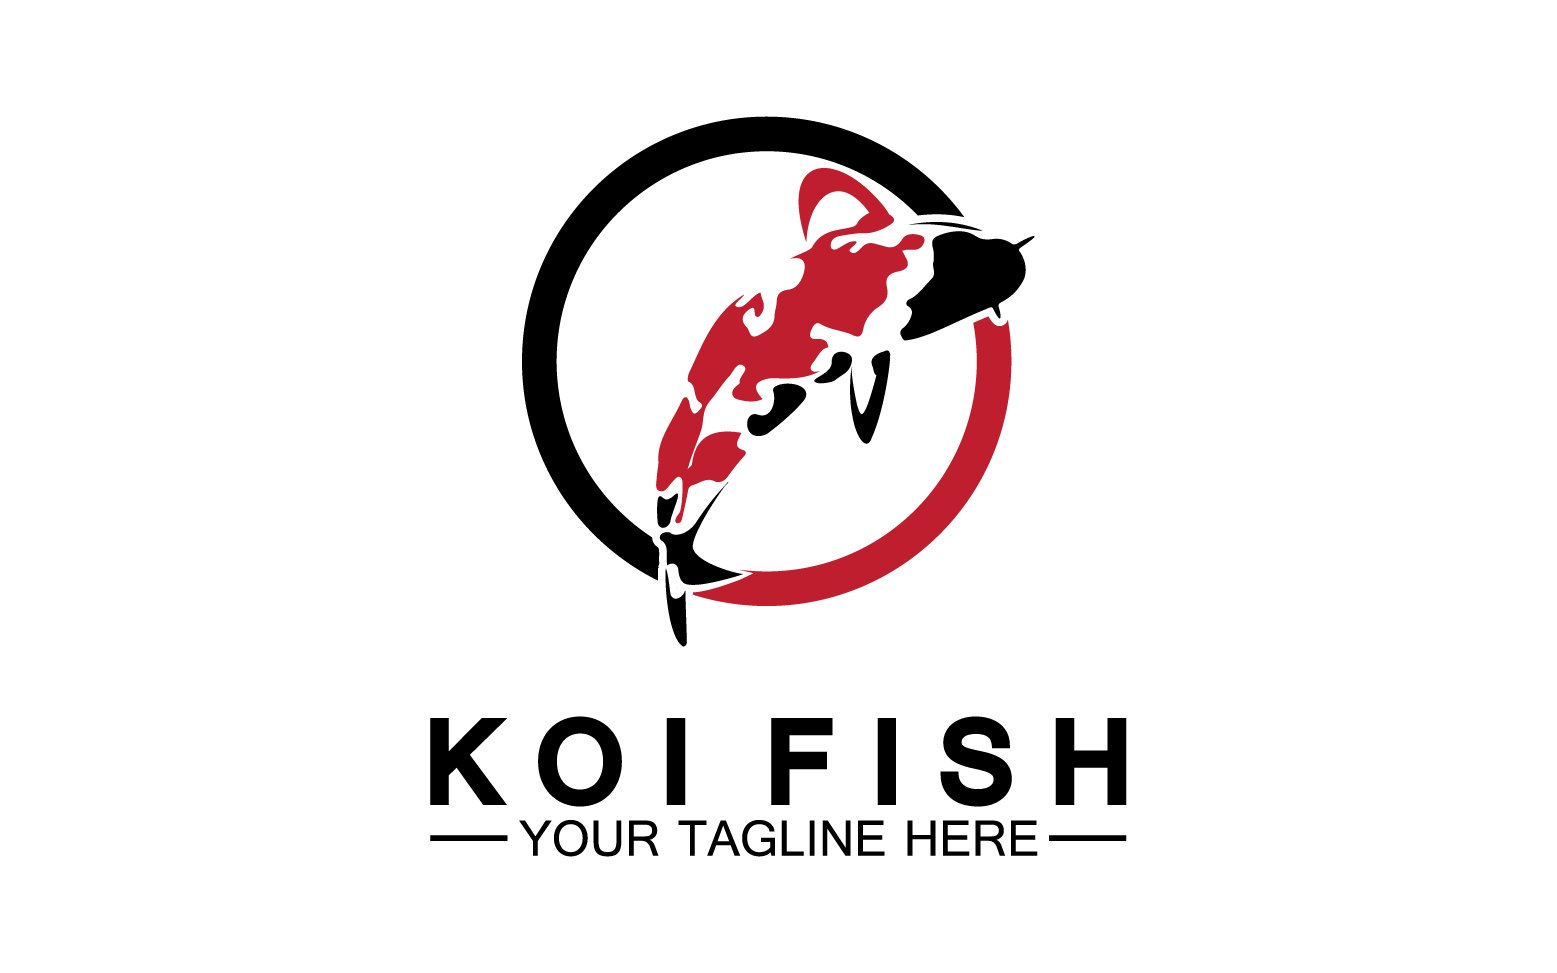 Fish koi black and red icon logo vector v21